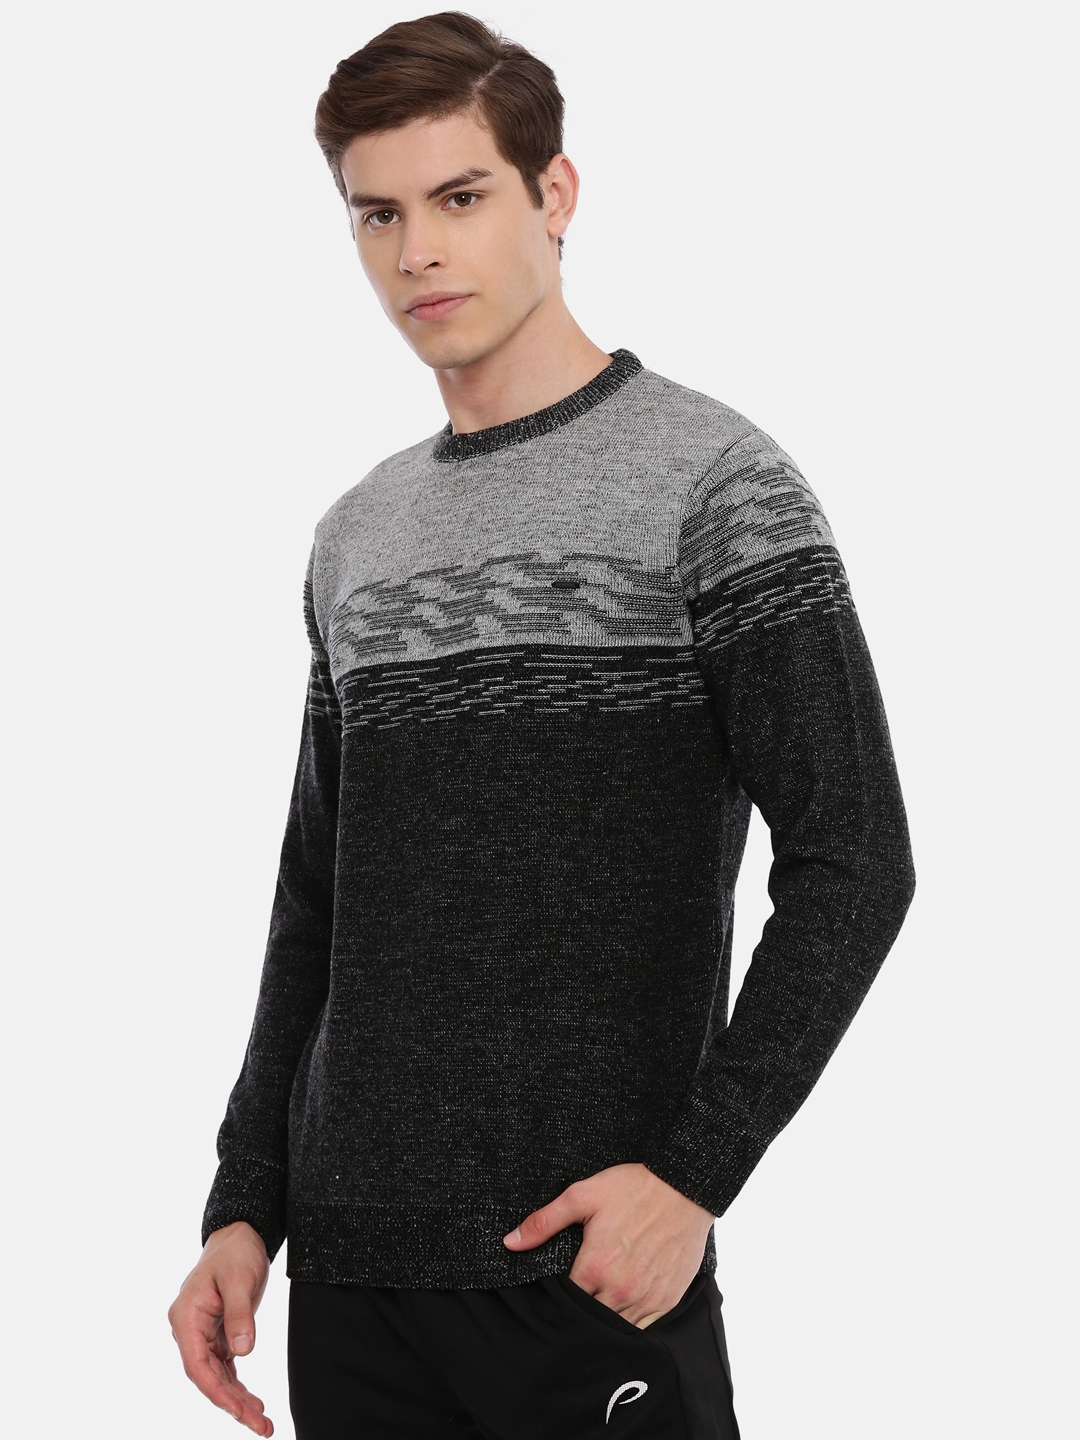 Men's Grey Cotton Melange Sweaters